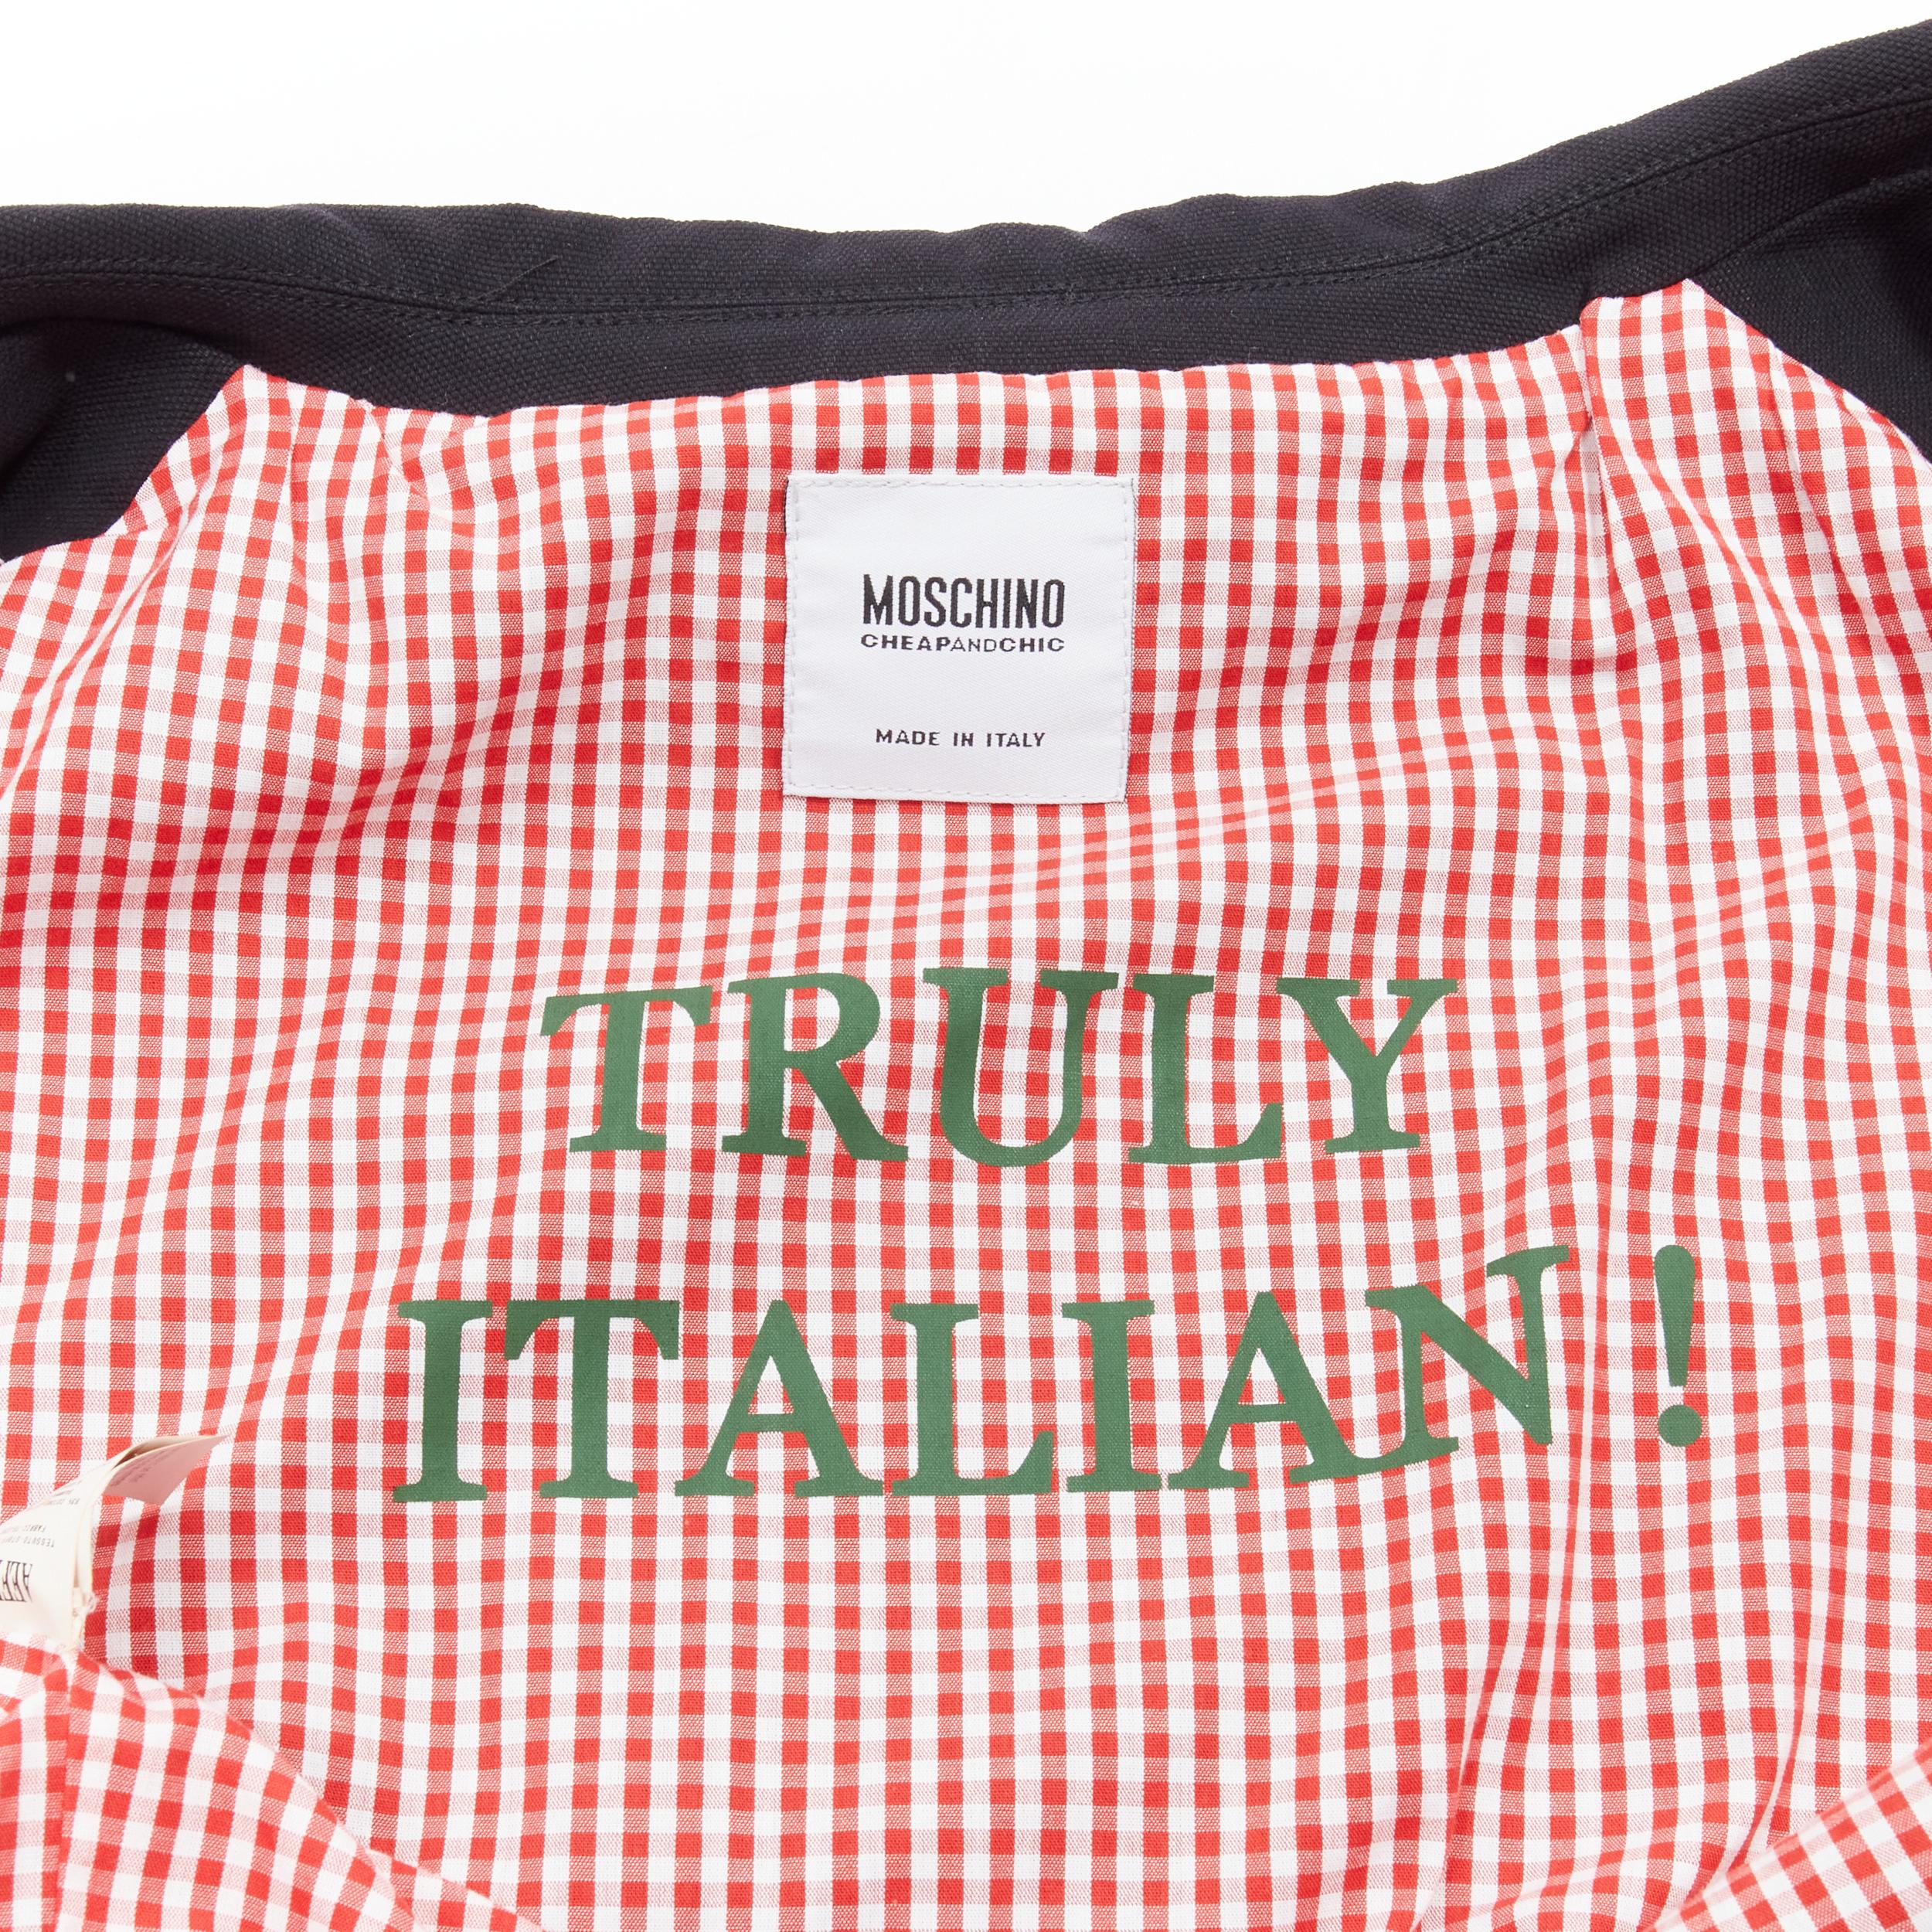 MOSCHINO CHEAP CHIC 2006 Truly Italian Runway navy pasta embellishment blazer For Sale 5